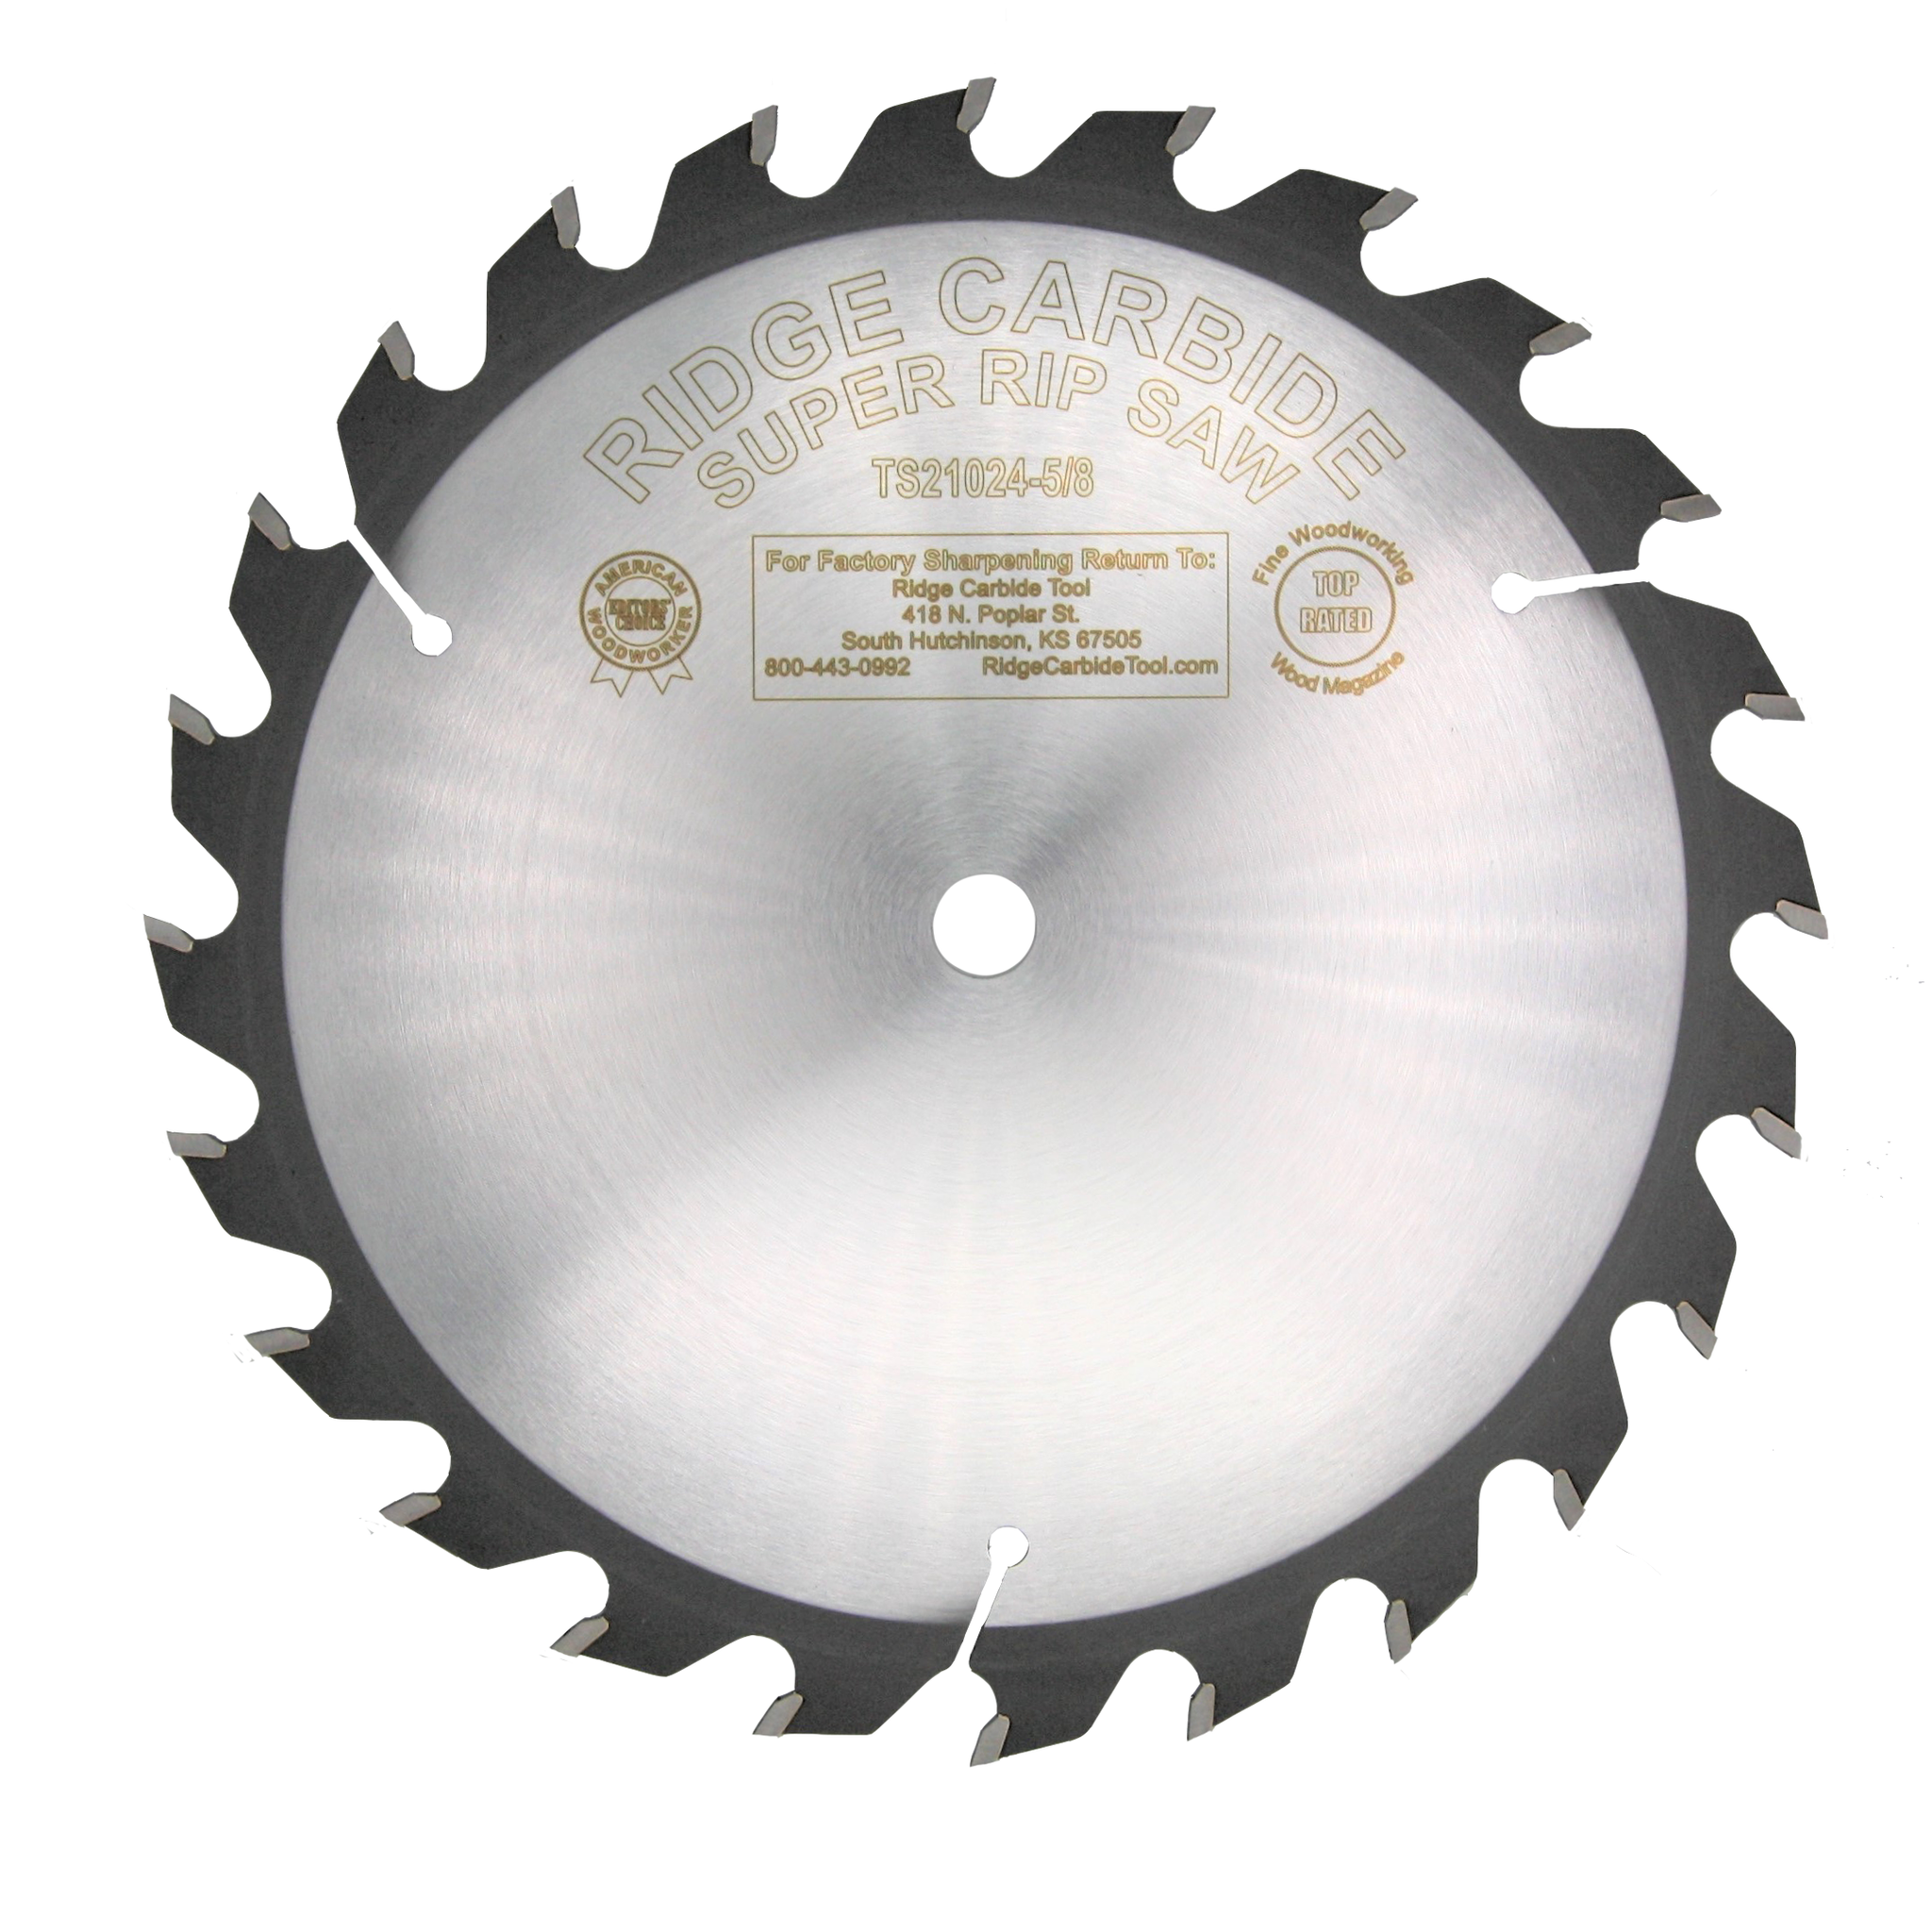 Oldham Industrial Carbide Circular Saw Blade - B7254524-10